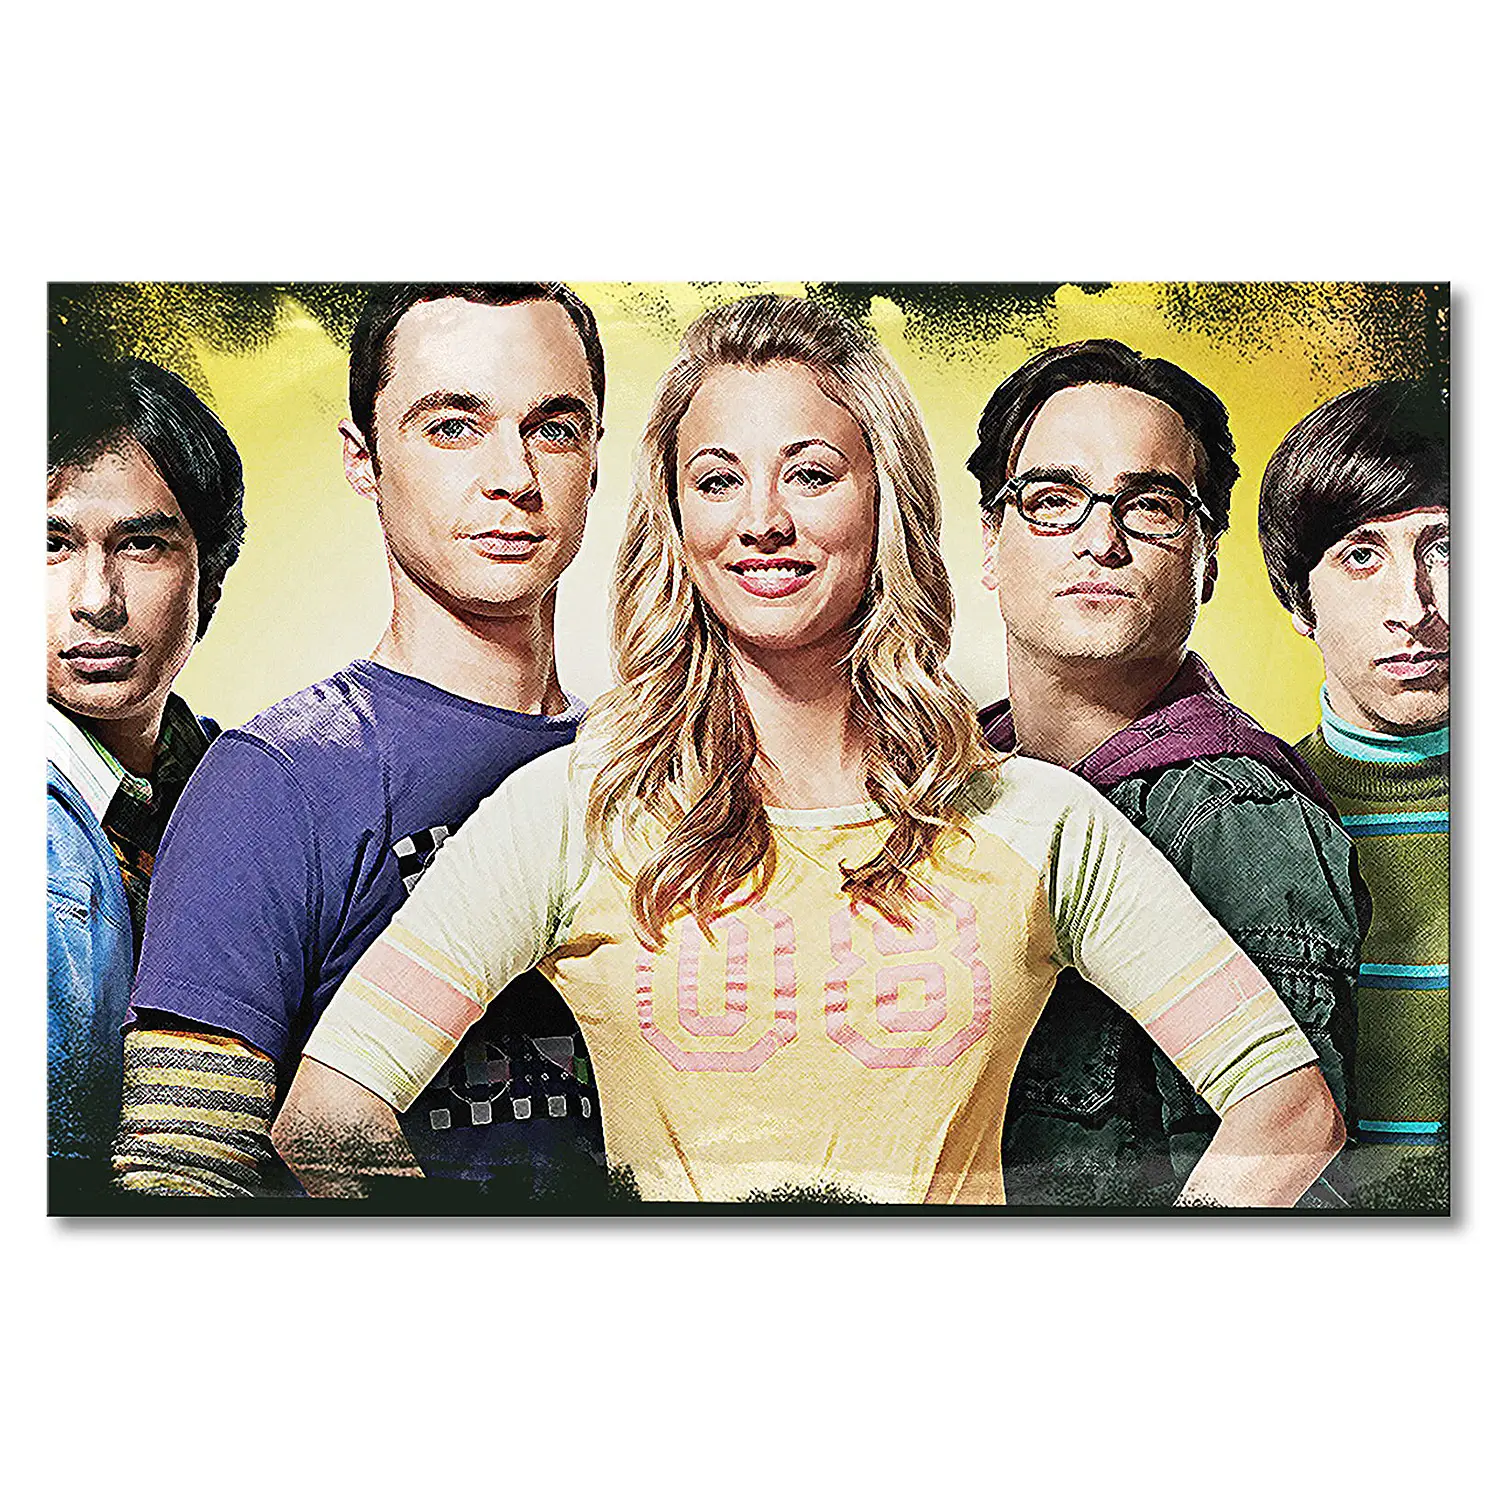 The Bang Big Theory Leinwandbild